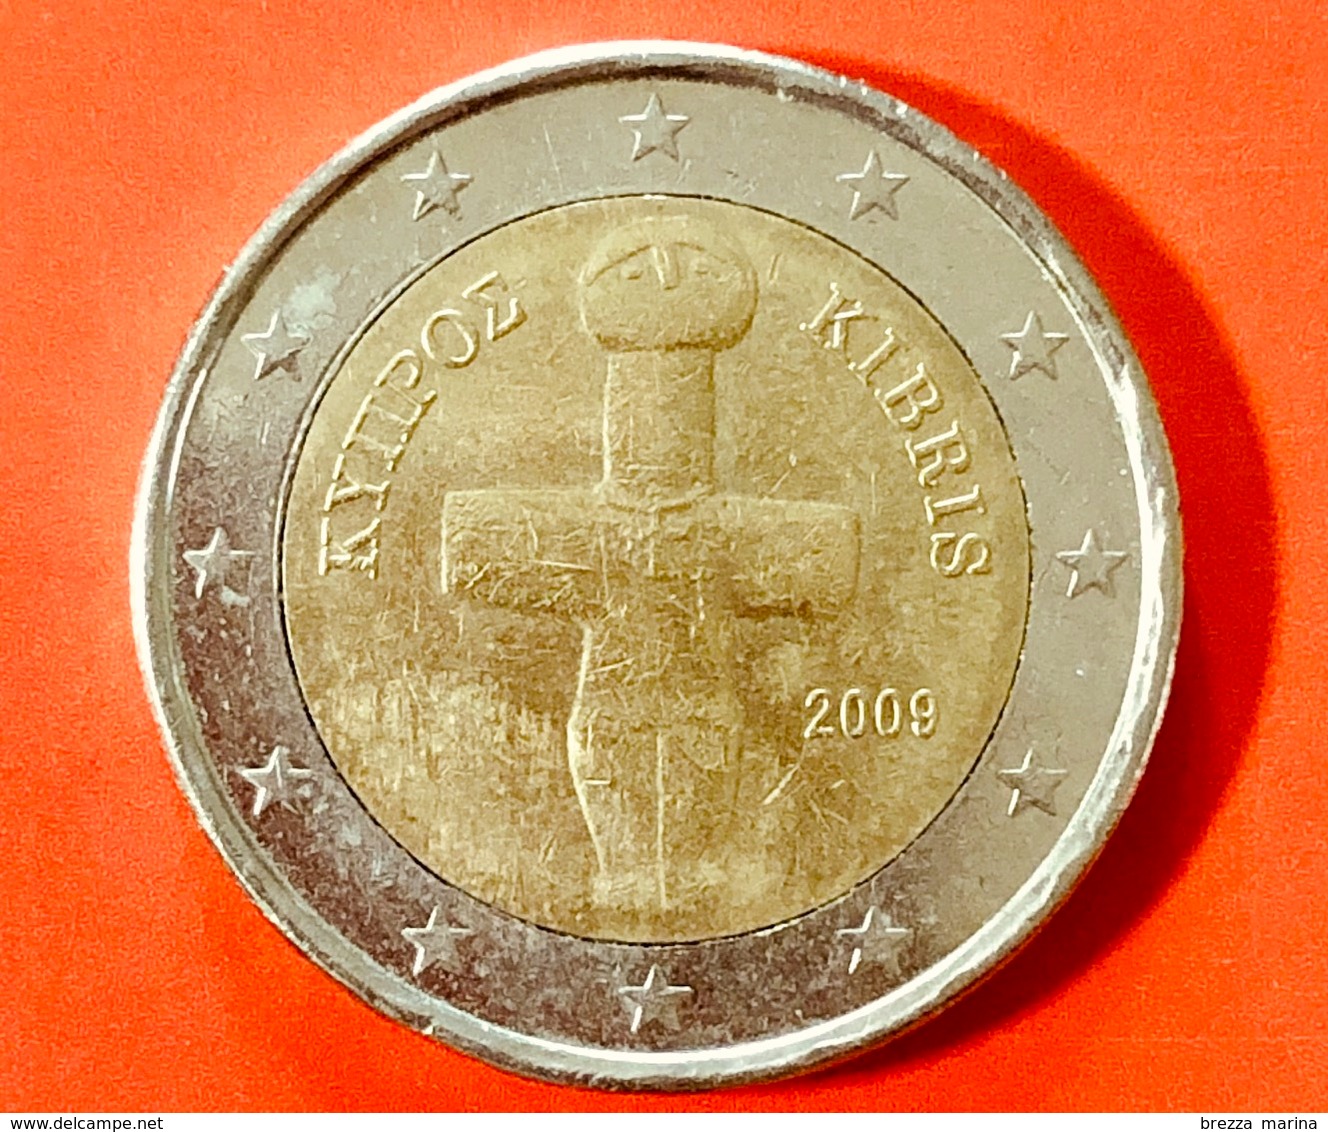 CIPRO - 2009 - Moneta - Idolo Cruciforme Del Periodo Calcolitico (3000 A.C.) - Euro - 2.00 - Cipro